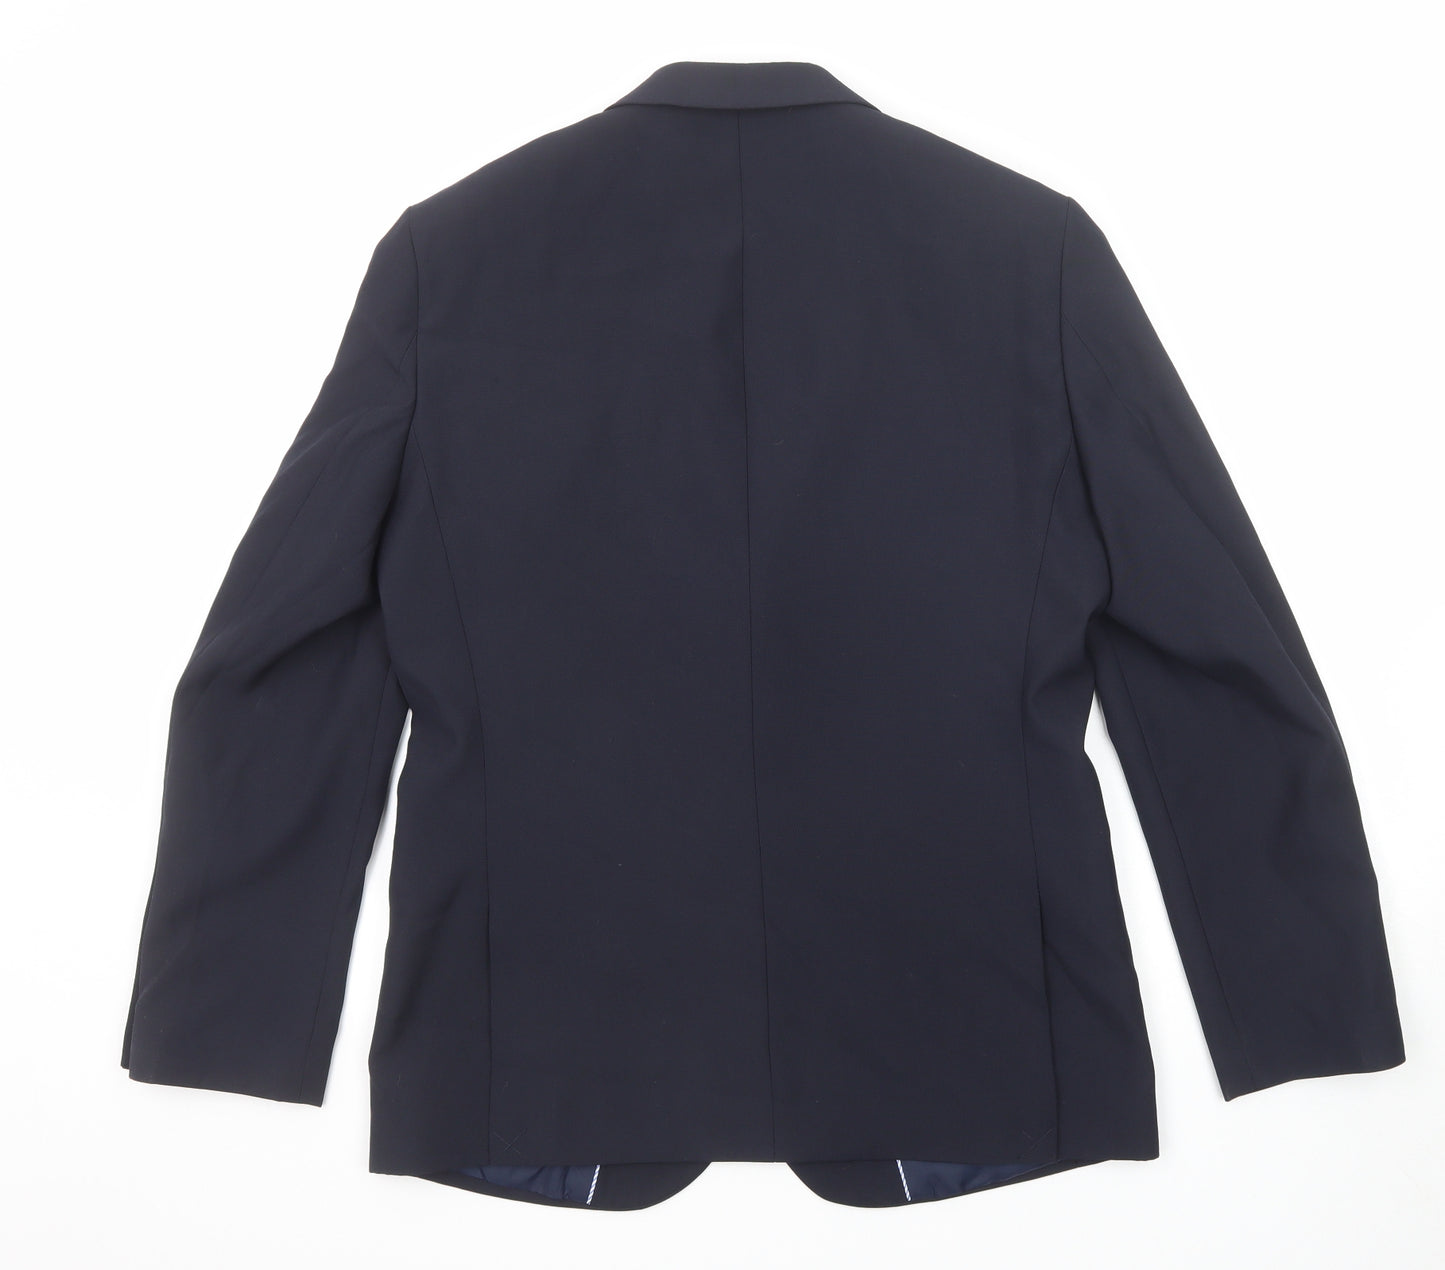 Fellini Mens Blue Polyester Jacket Suit Jacket Size 40 Regular